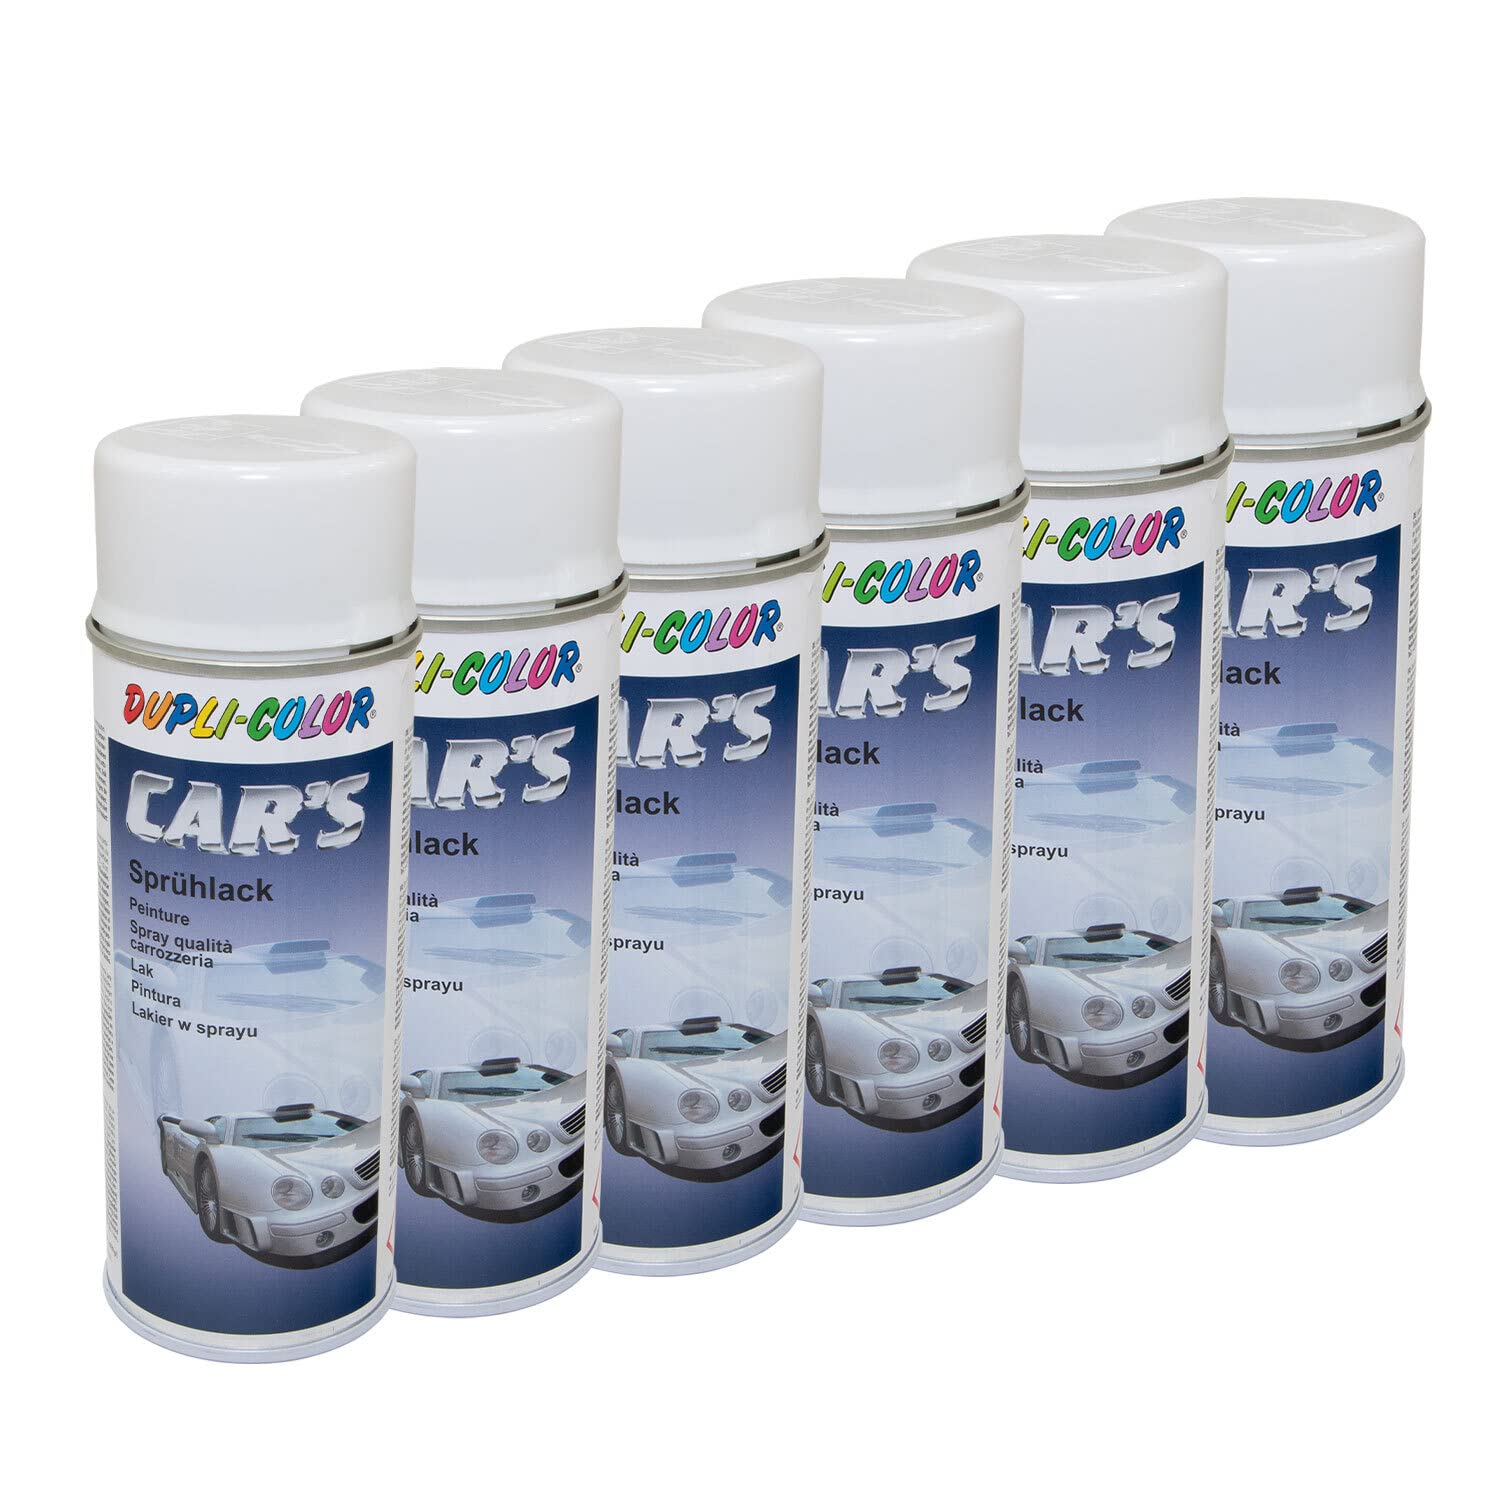 Lackspray Spraydose Sprühlack Cars Dupli Color 652233 weiss seidenmatt 6 X 400 ml von DUPLI_bundle